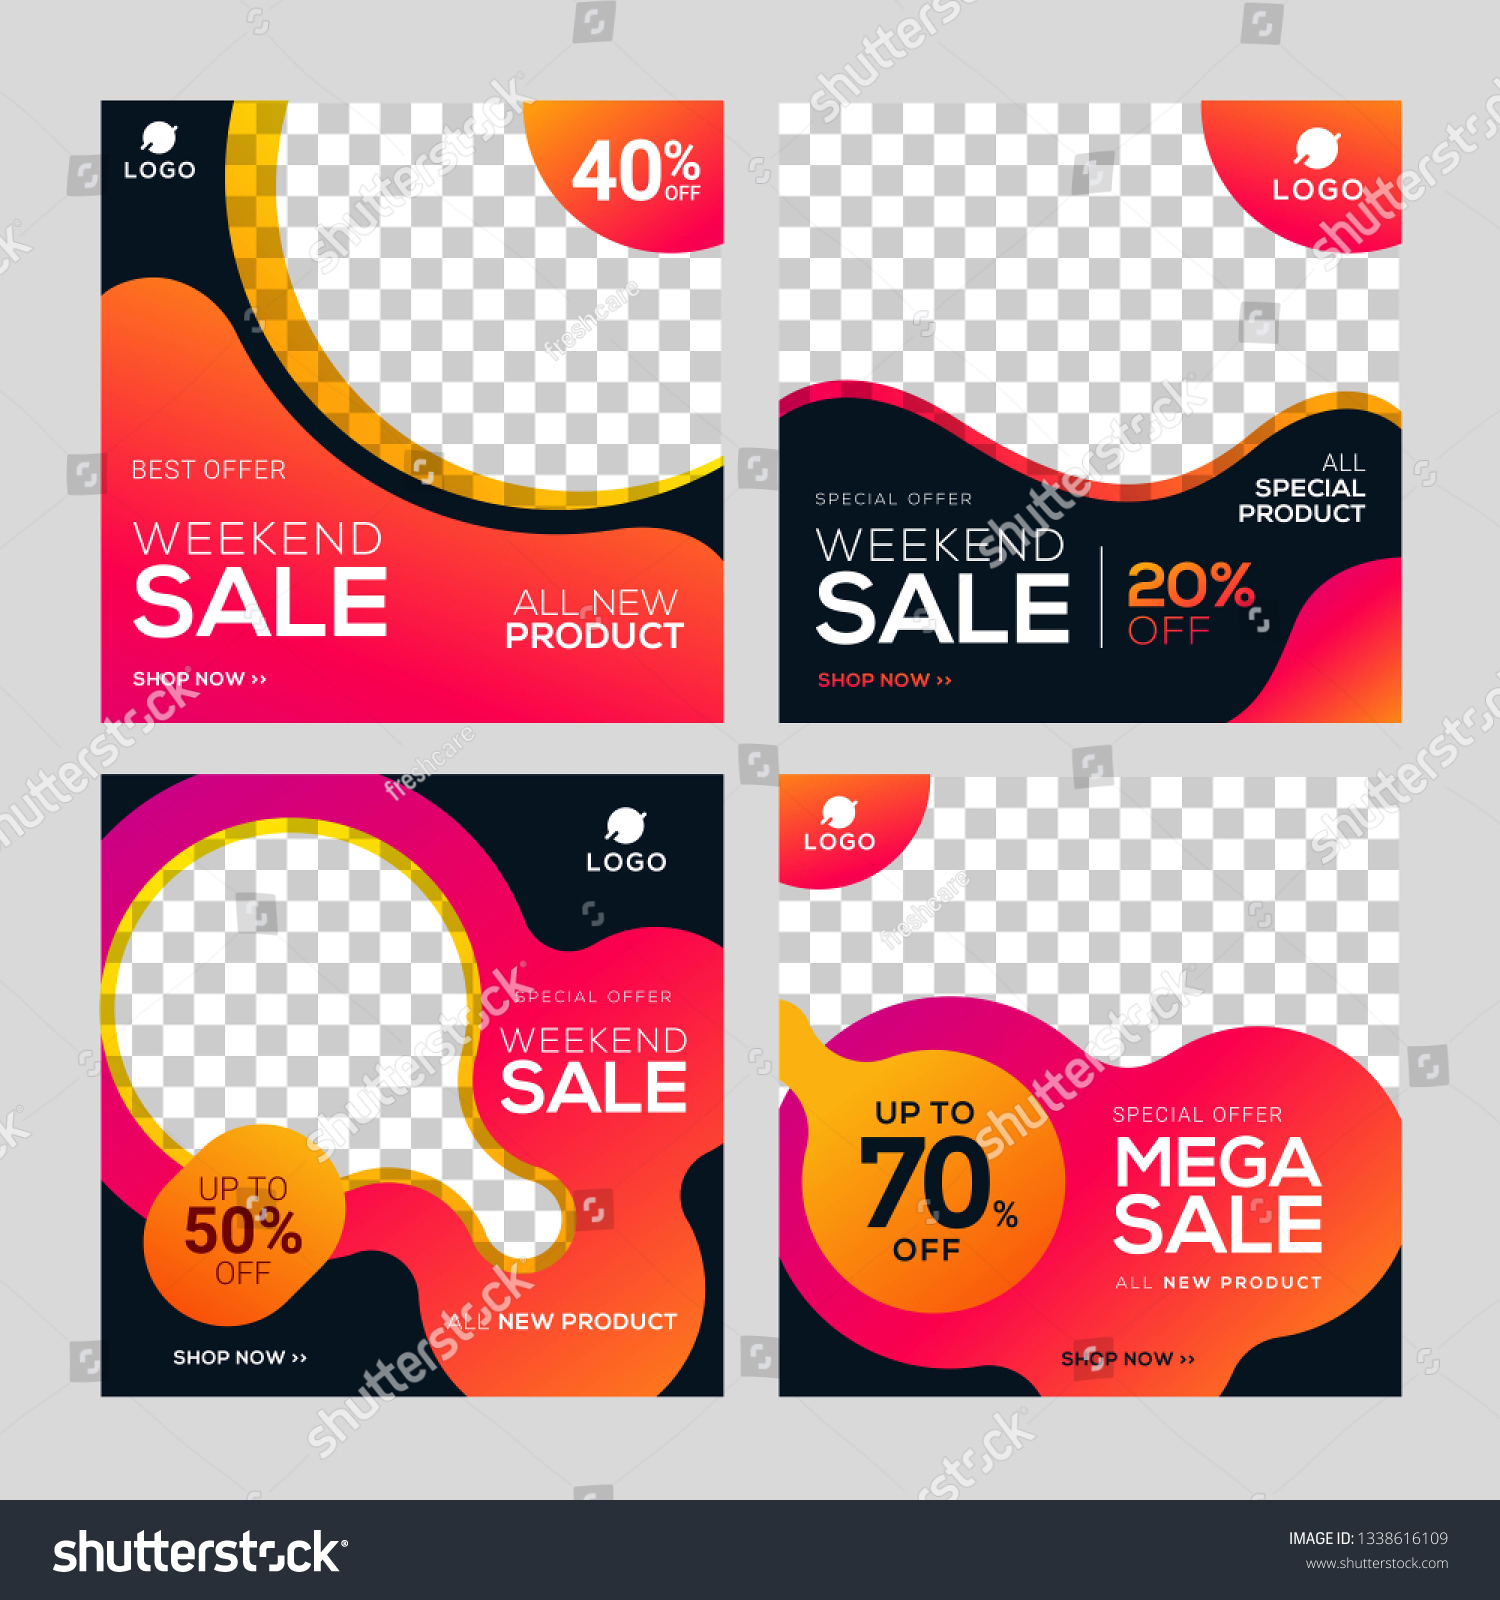 Editable Post Template Social Media Banners for Digital Marketing #1338616109